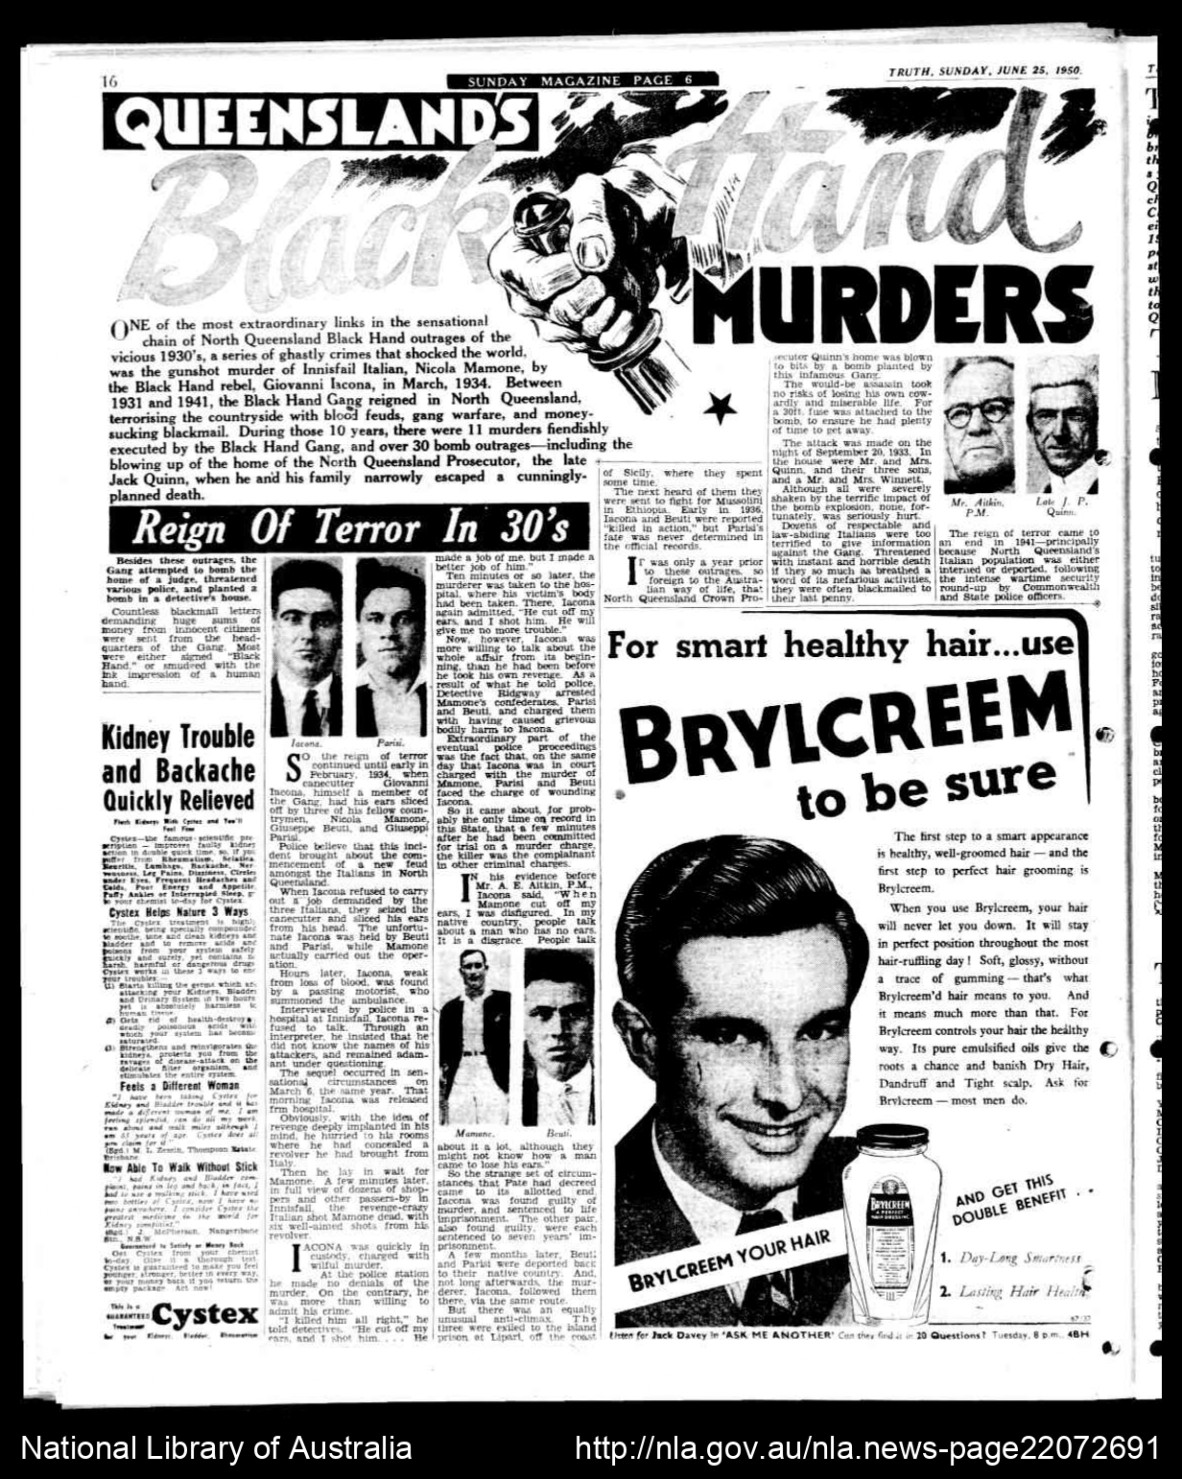 Queenslands Black Hand Murders Truth Brisbane Qld  1900 - 1954 Sunday 25 June 1950 page 16